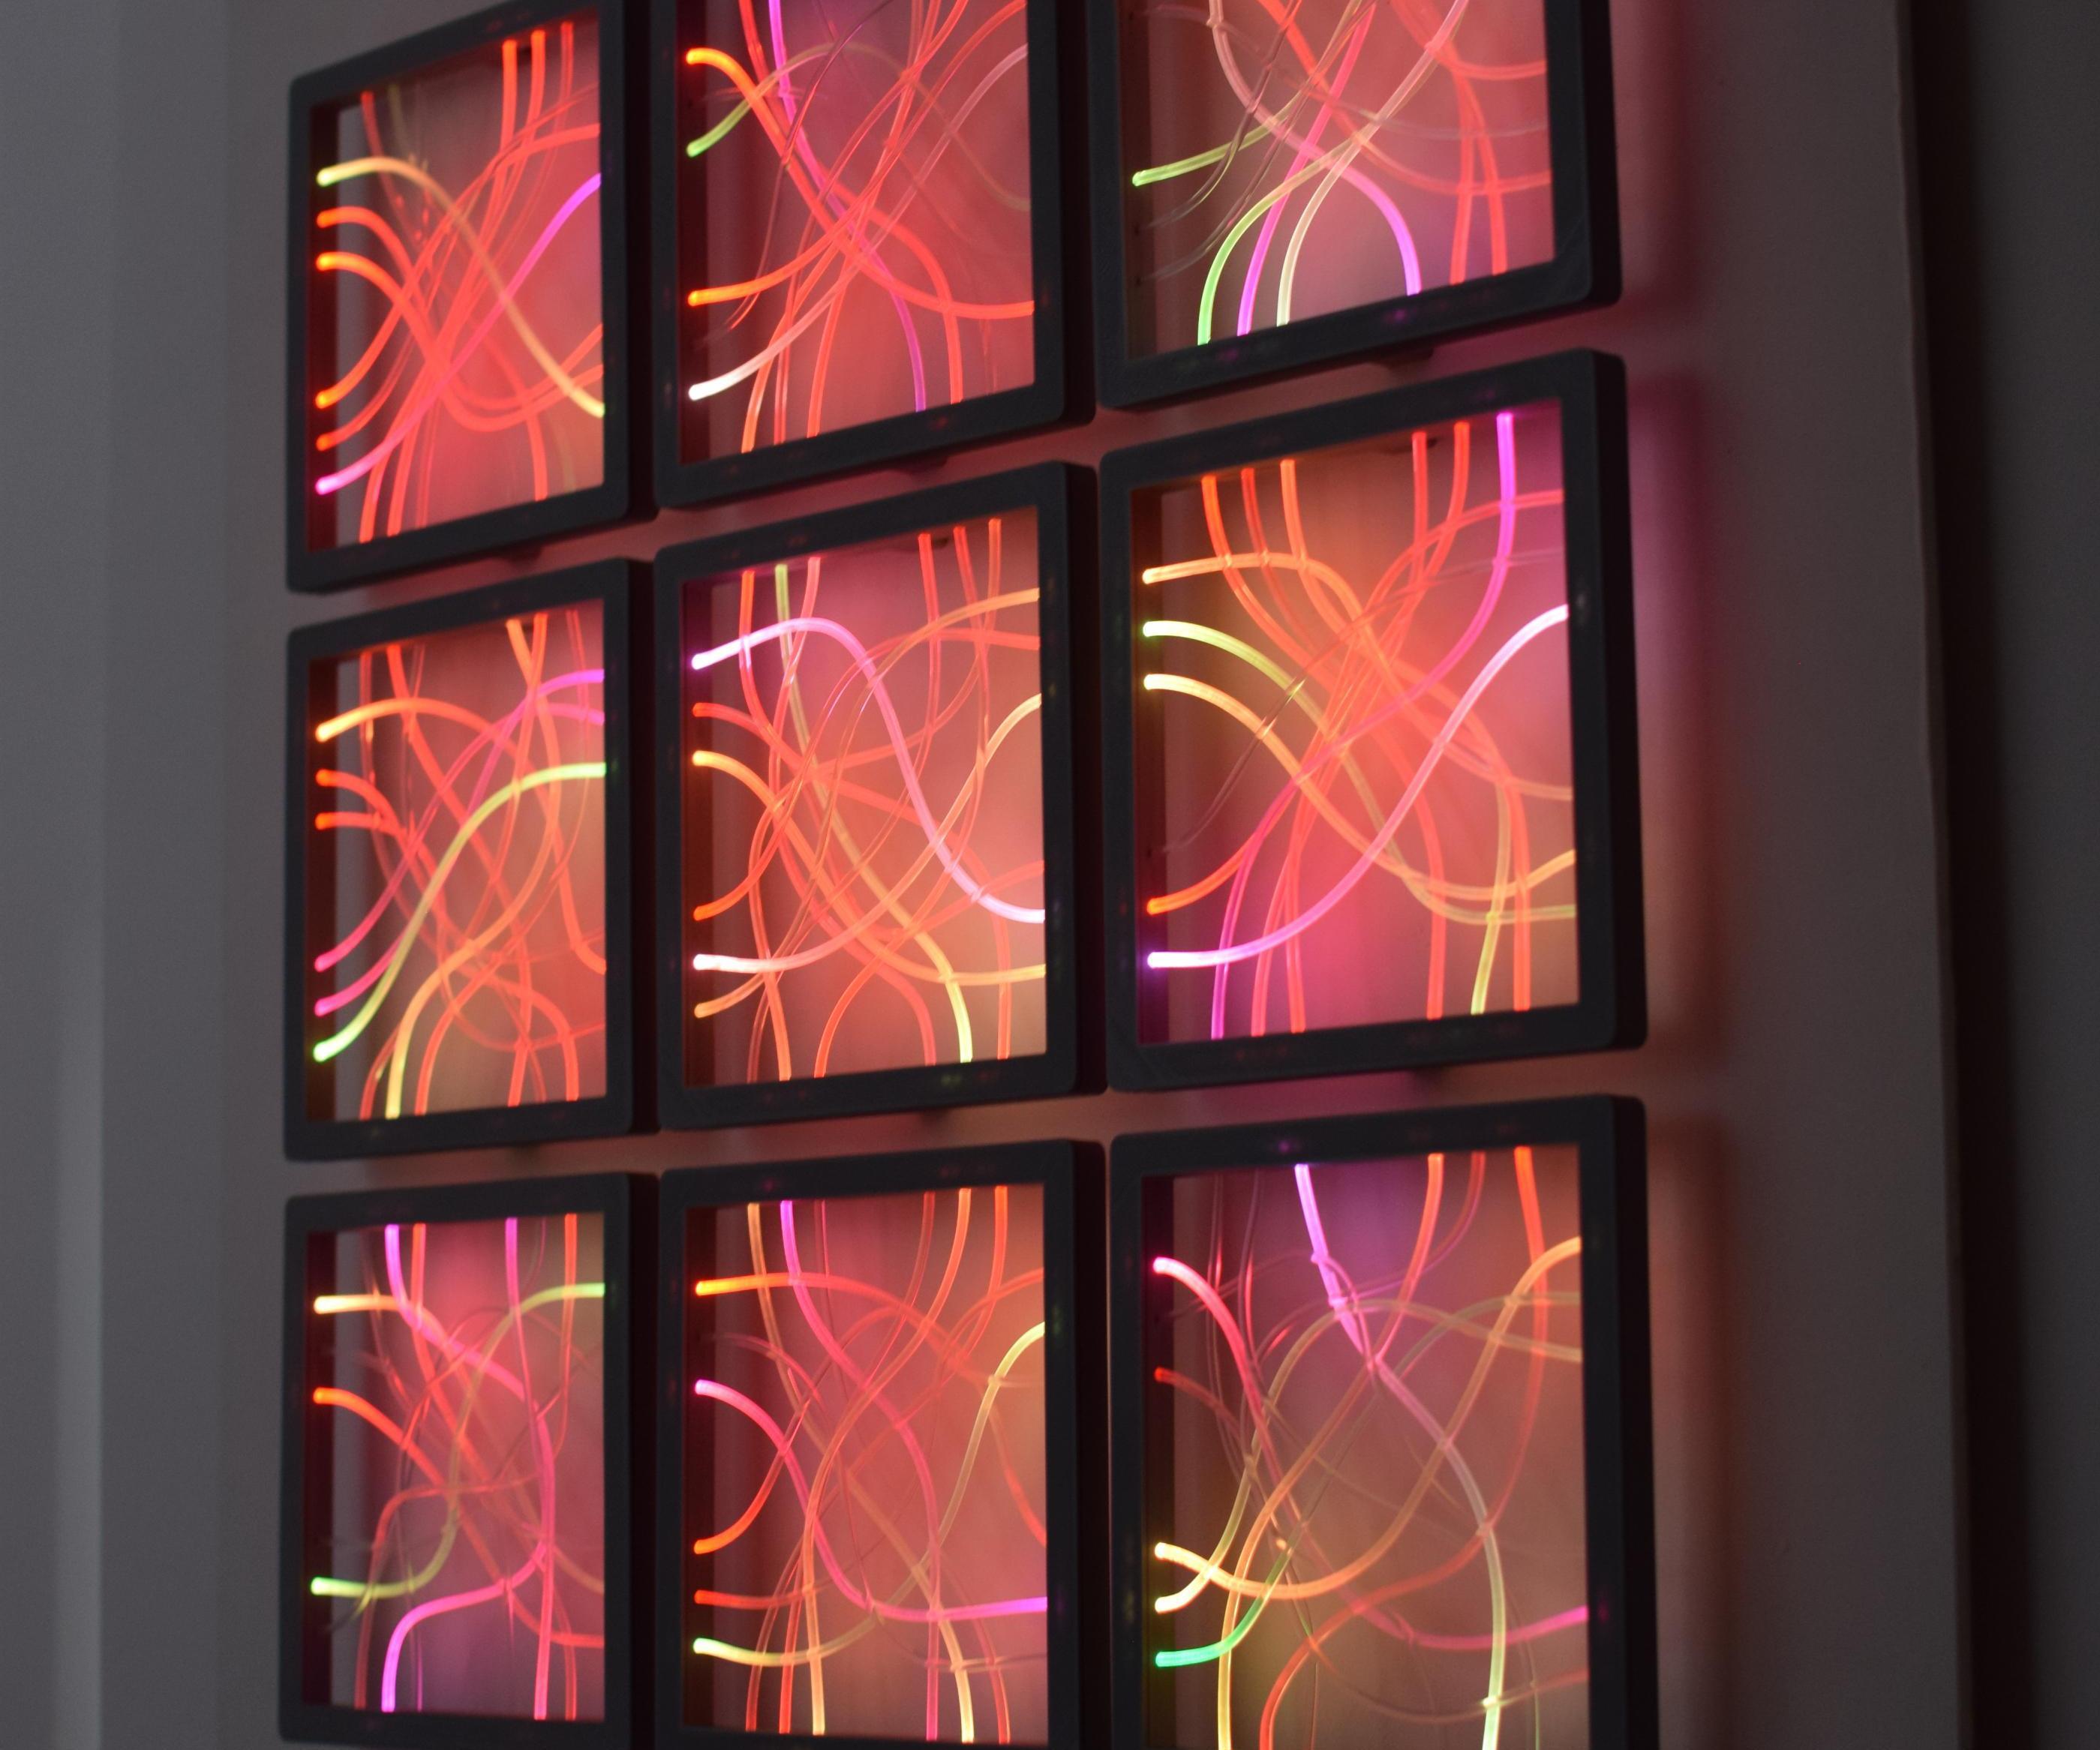 Fiber Optic and LEDs - a Wall Decoration